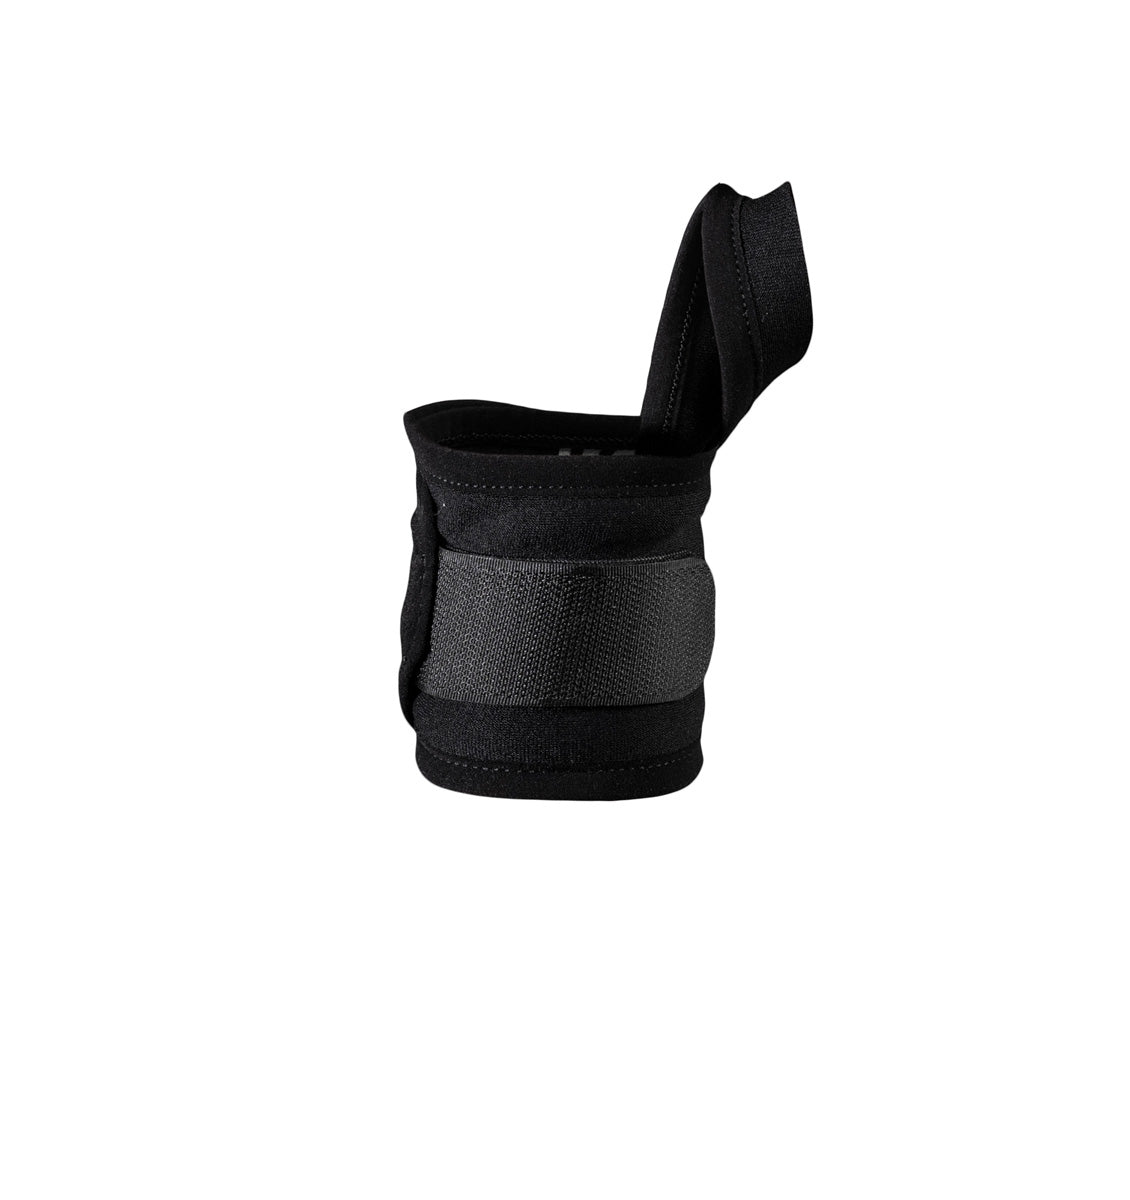 111206-01 Rehband QD Wrist & Thumb Support Black 1.5mm - Back